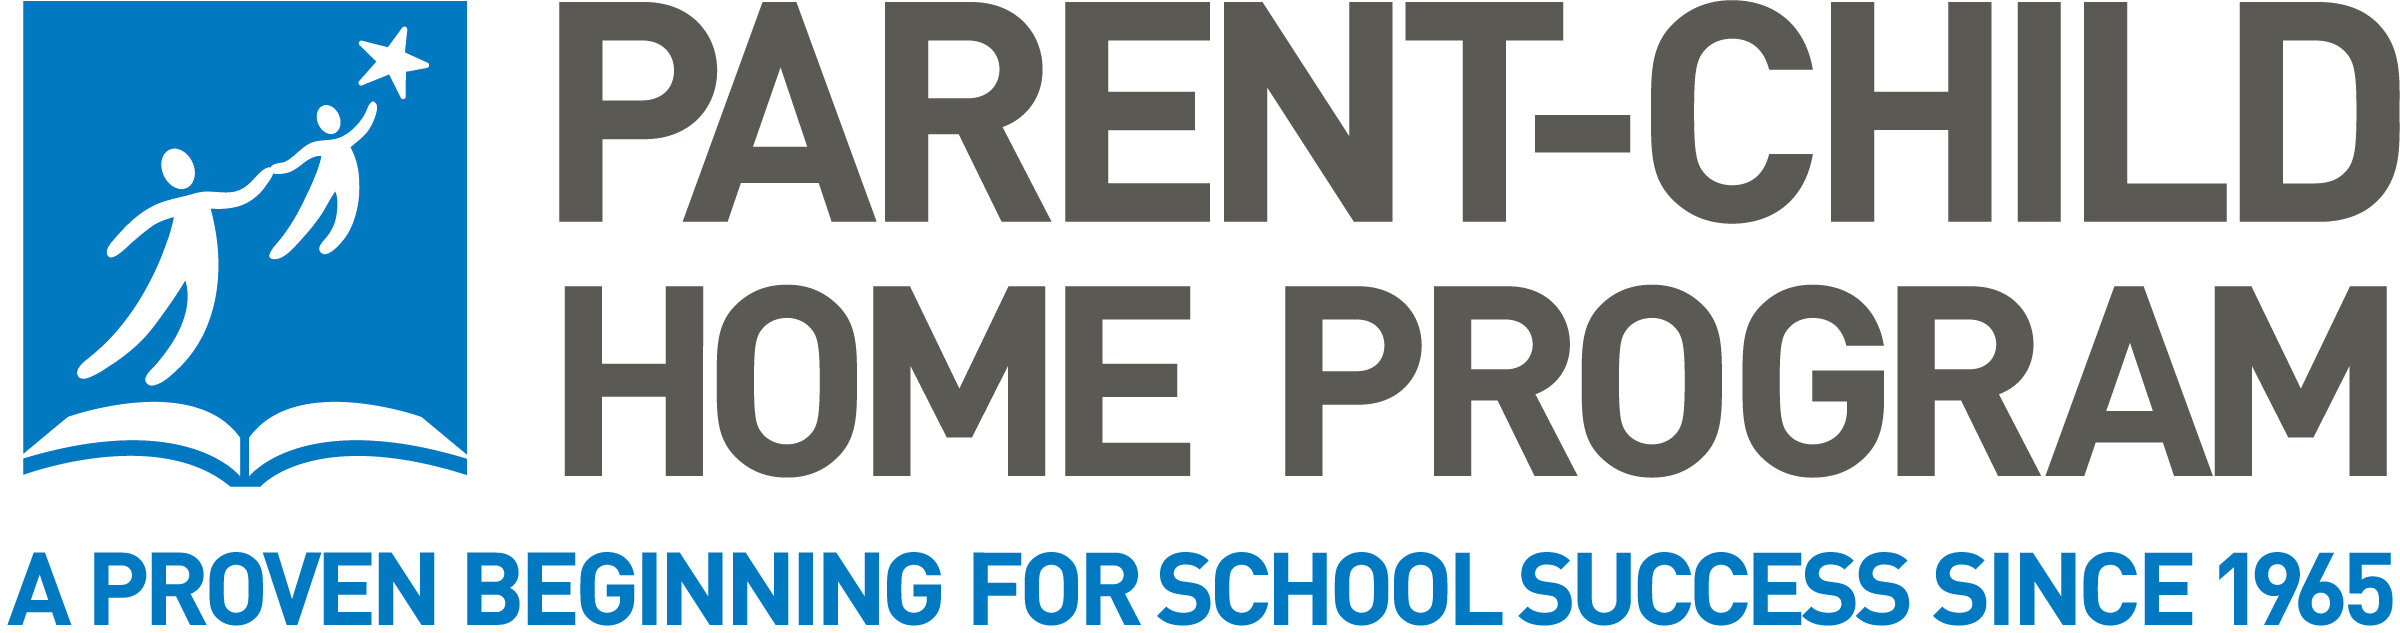 Parent-Chid Home Program Logo.jpg